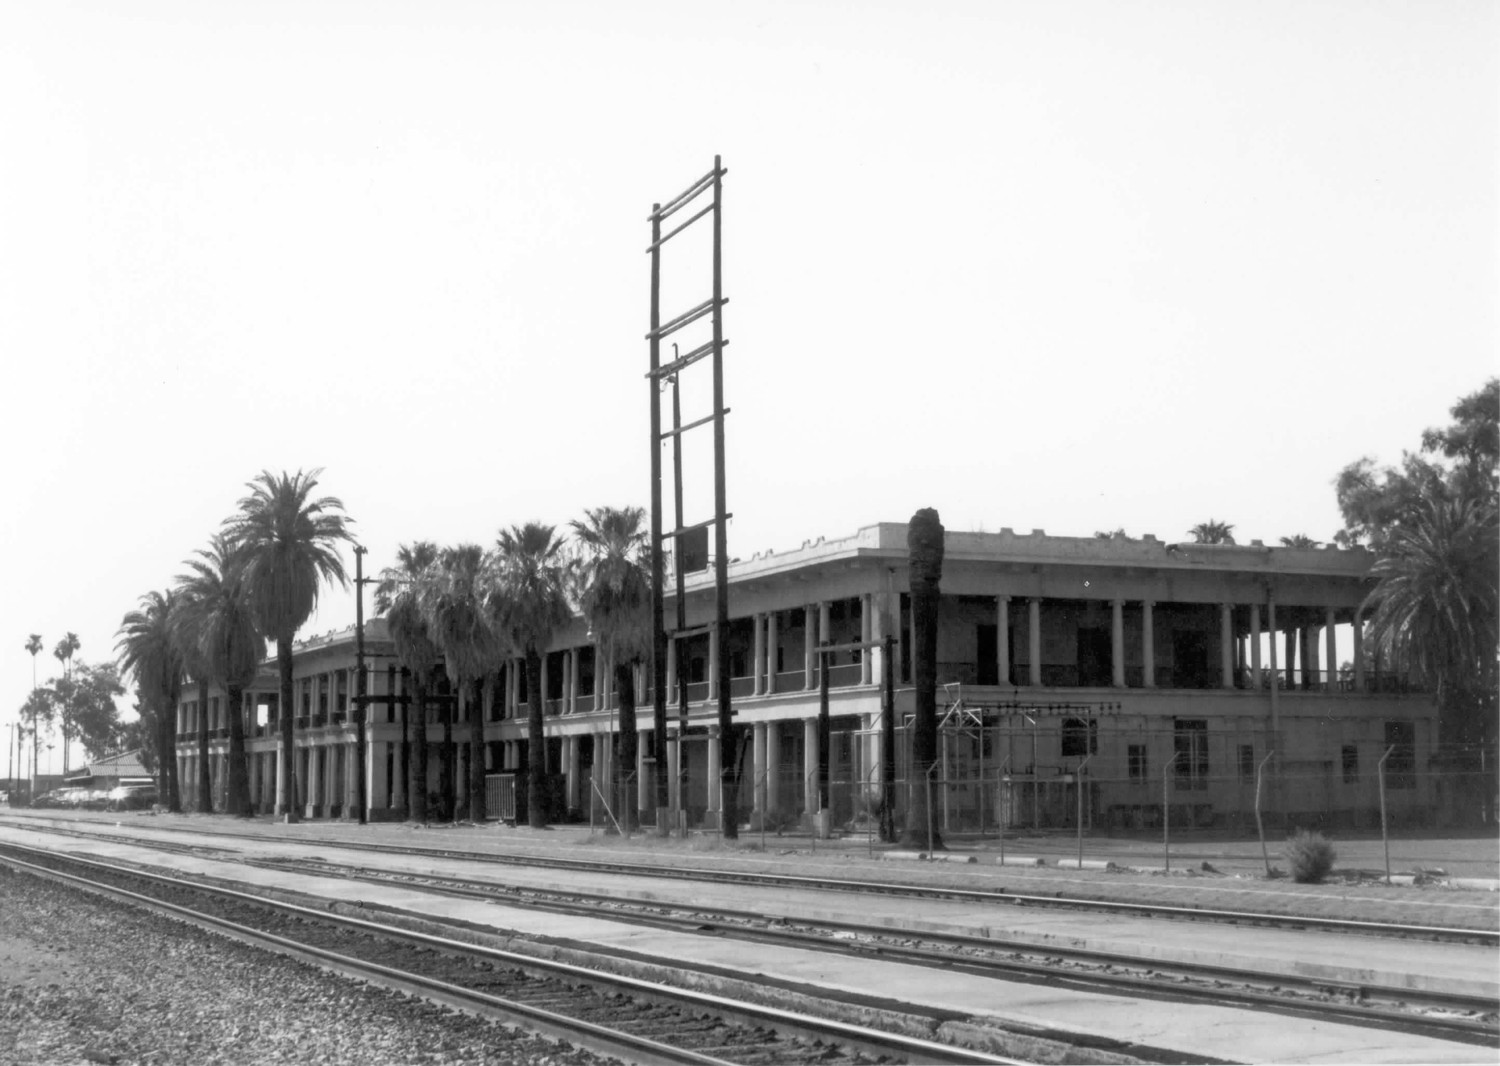 El Garces Hotel - Atchison Topeka & Santa Fe Railroad Depot, Needles California 2000